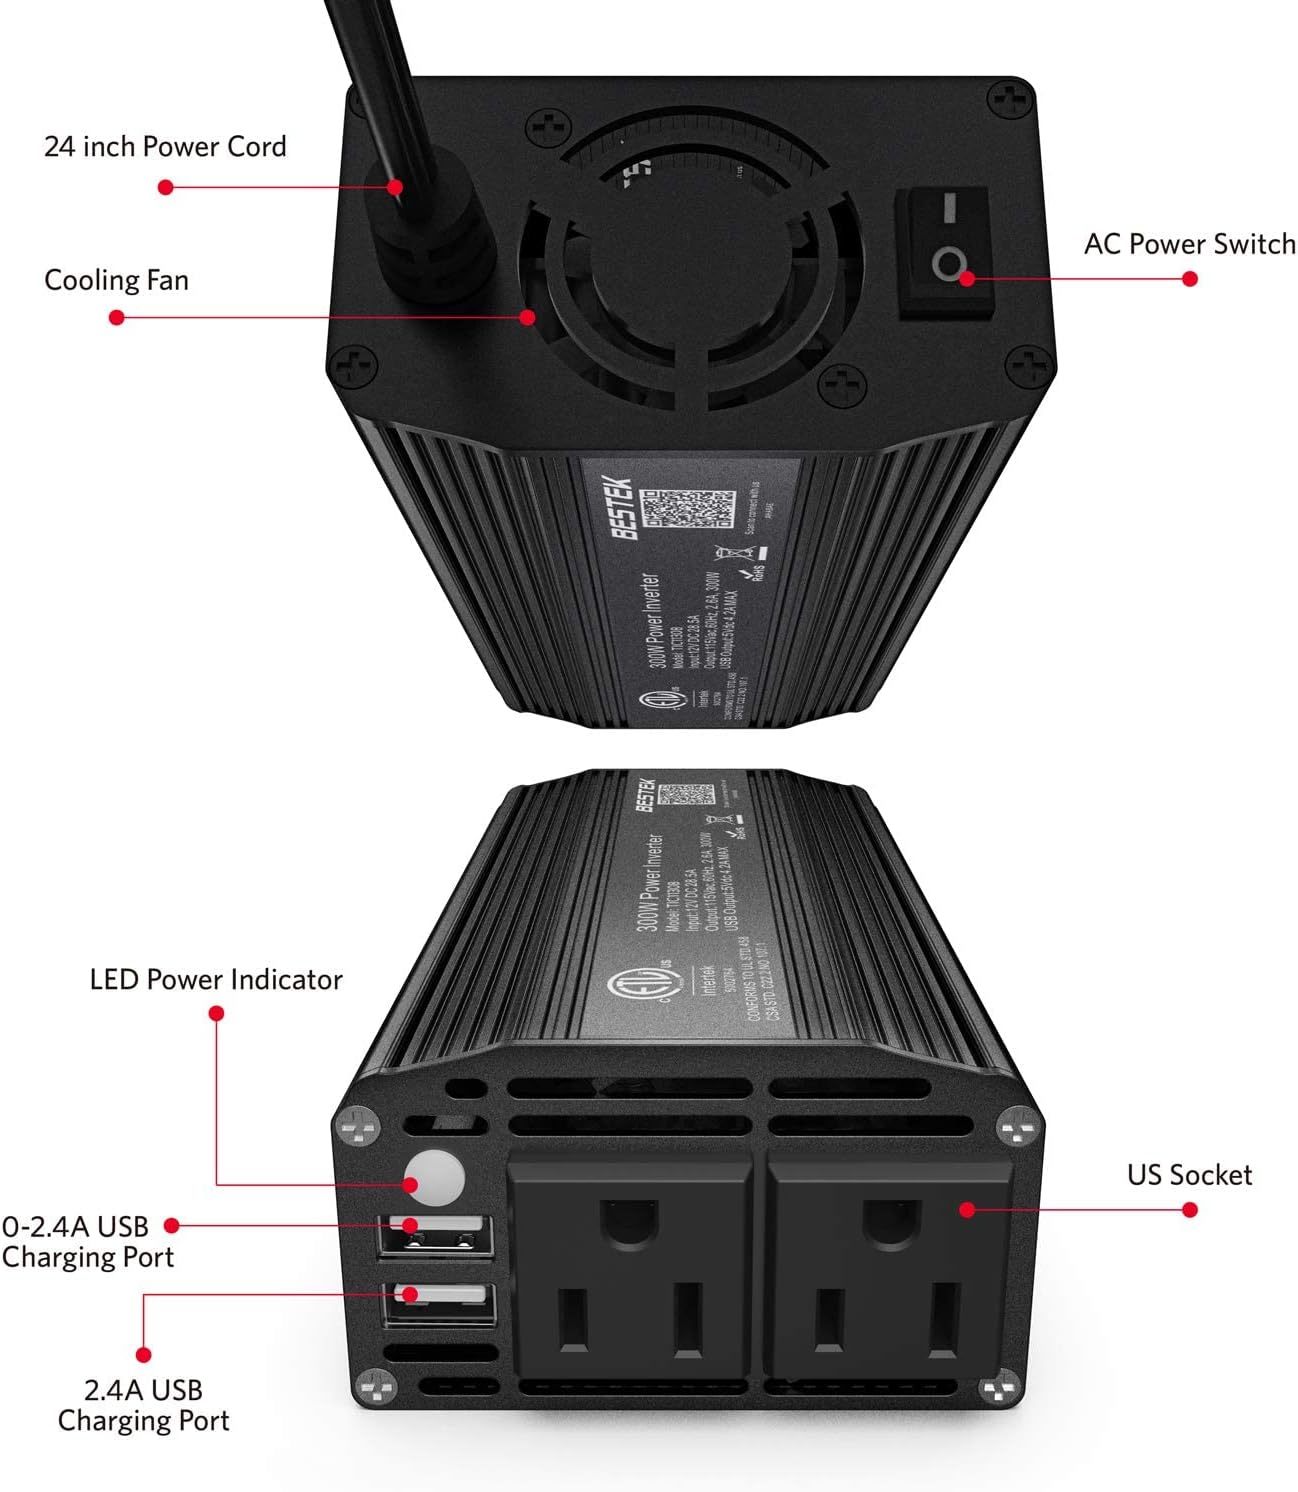 BESTEK Power Inverter150W 12V Power Inverter With 3.1A Dual USB Charging  Ports For Car